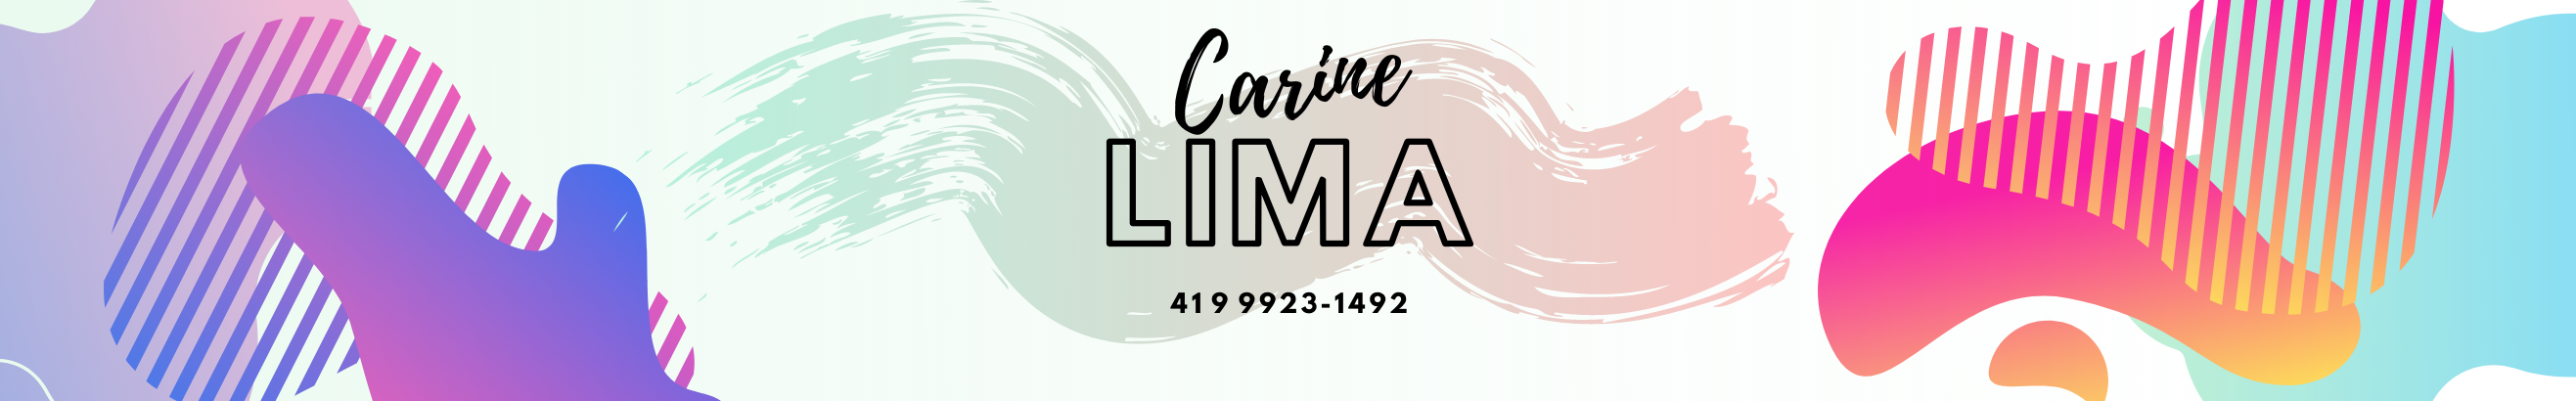 Carine Limas profilbanner